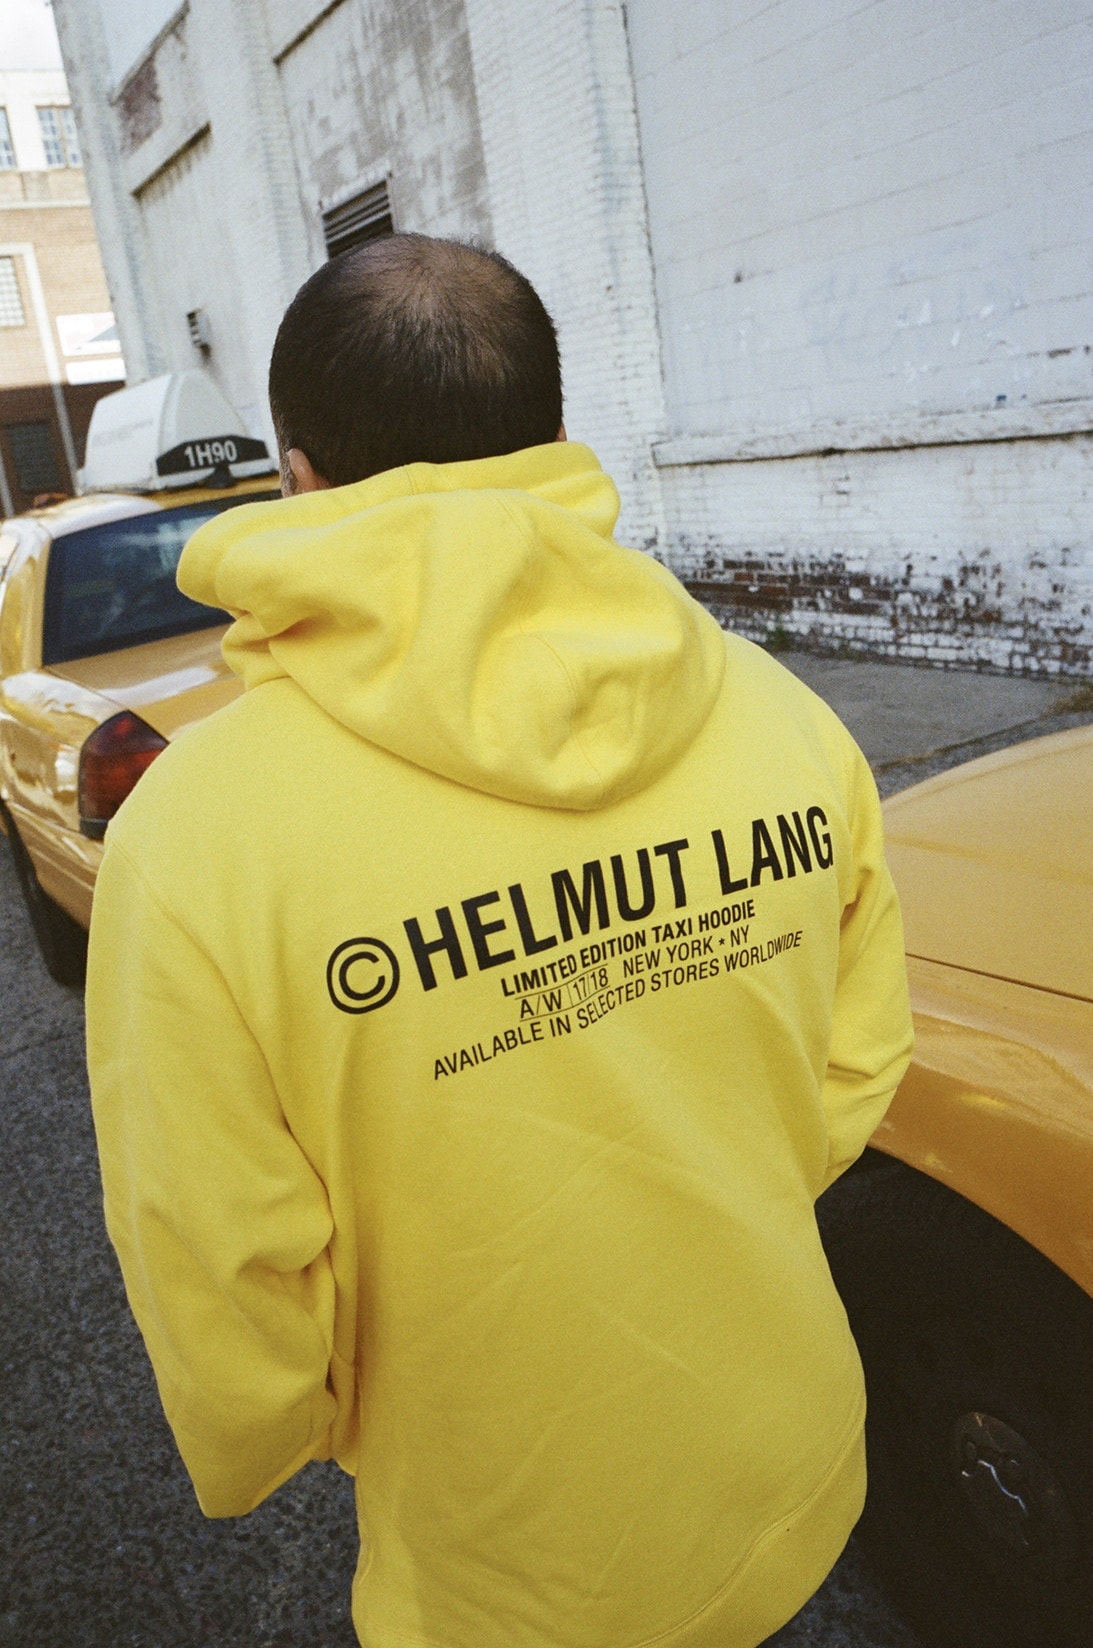 Helmut Lang 全新「Taxi Project」企劃完整公開